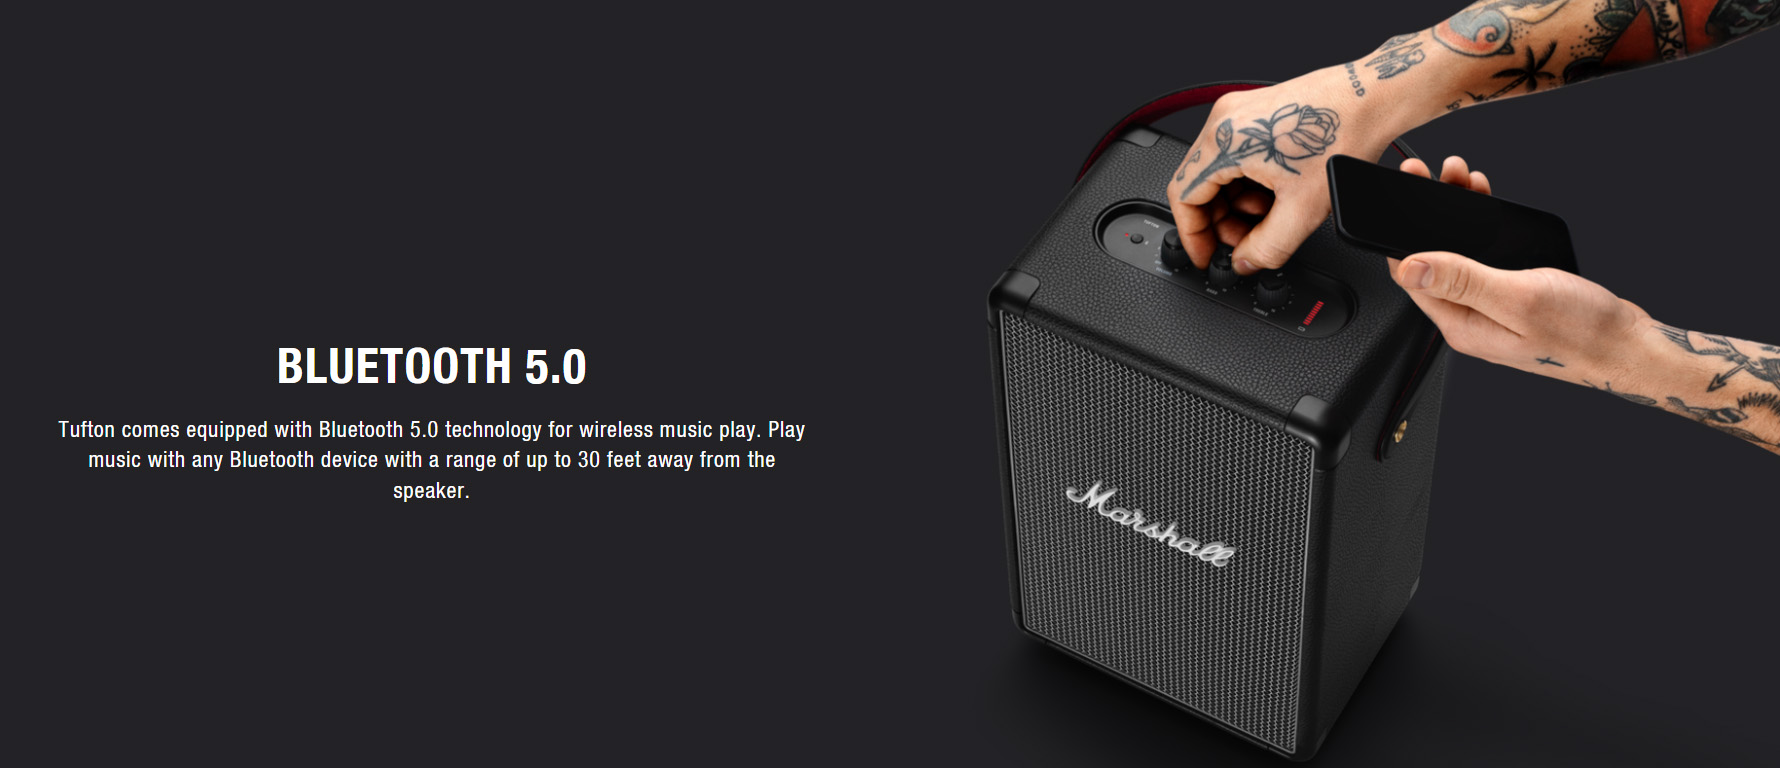 Marshall TUFTON Portable Bluetooth Speaker (Black&Brass) (1 Year Warranty)